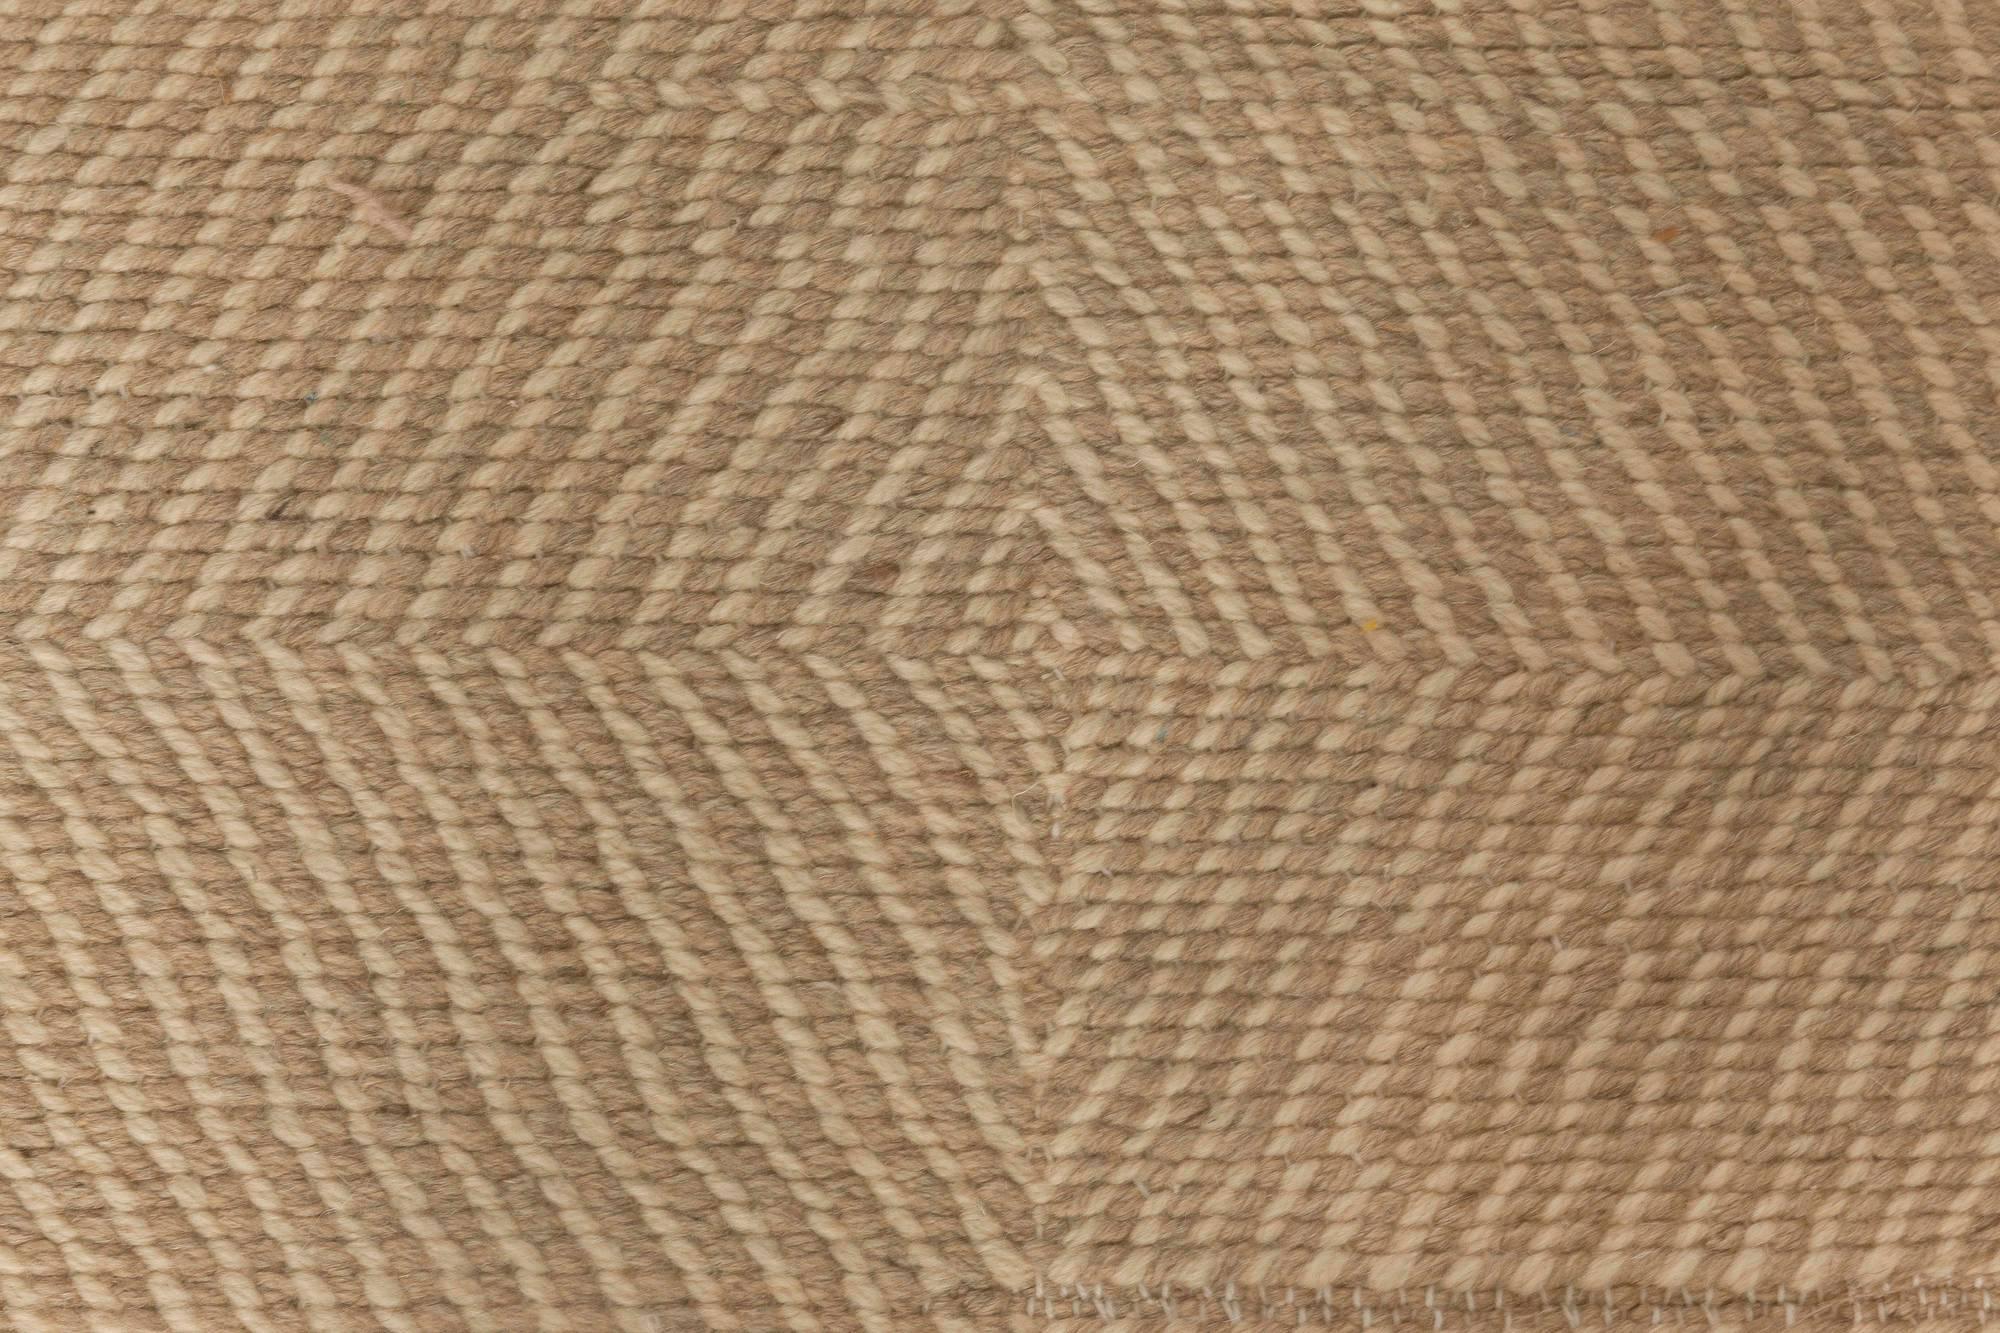 Contemporary Deux diamond beige and brown handmade wool rug by Doris Leslie Blau.
Size: 10'10